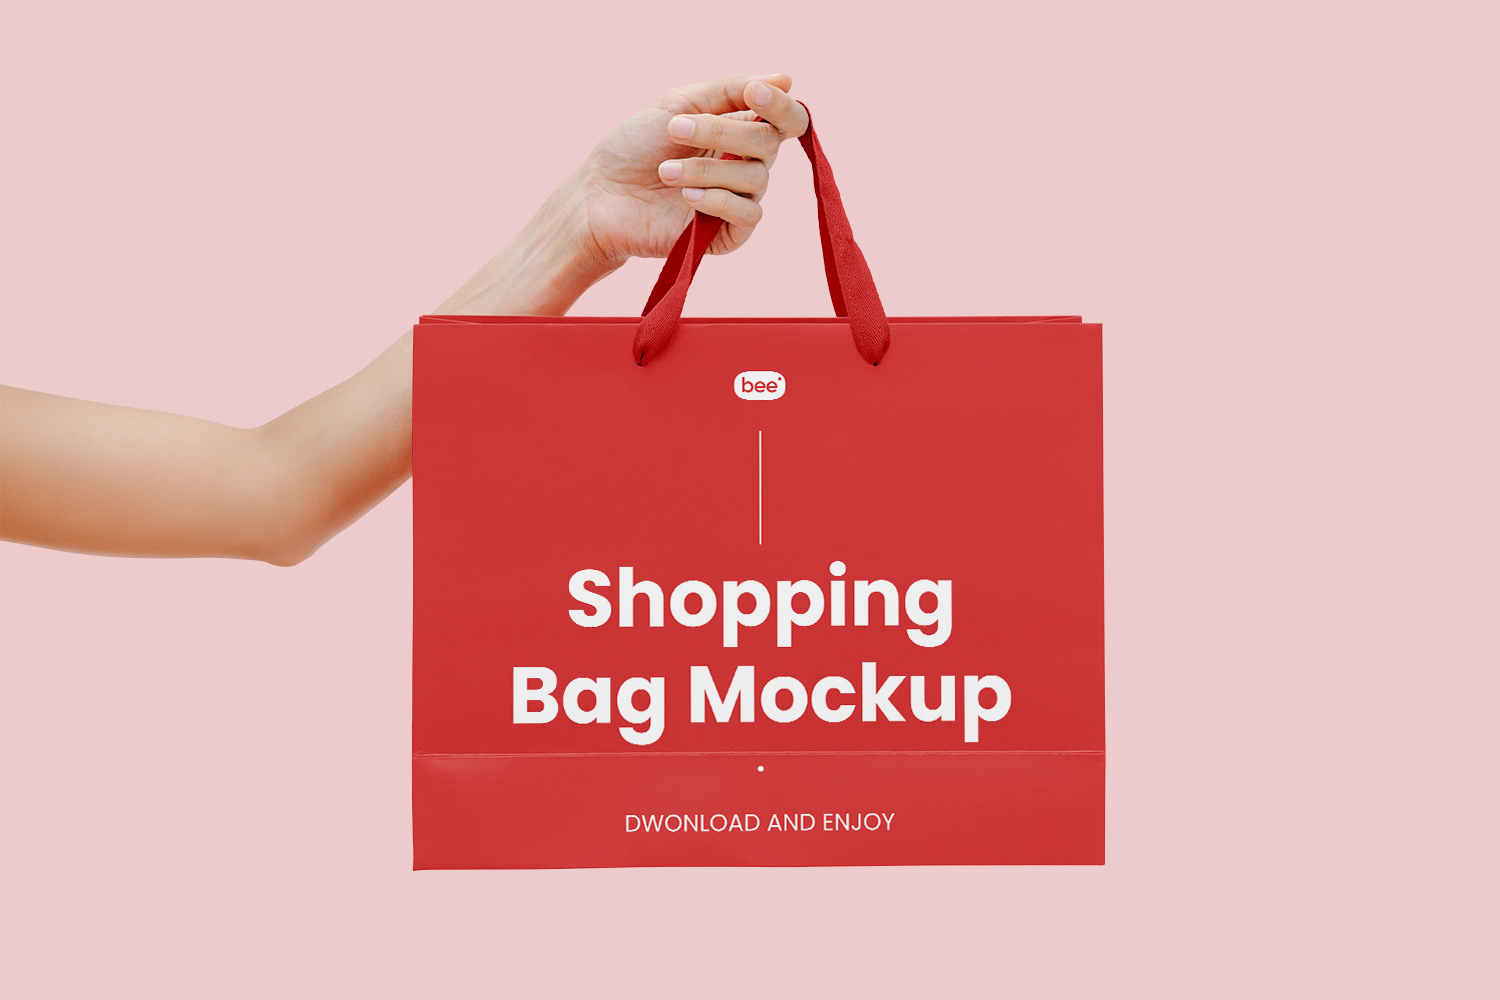 Shopping Bag in Hand Free Mockup